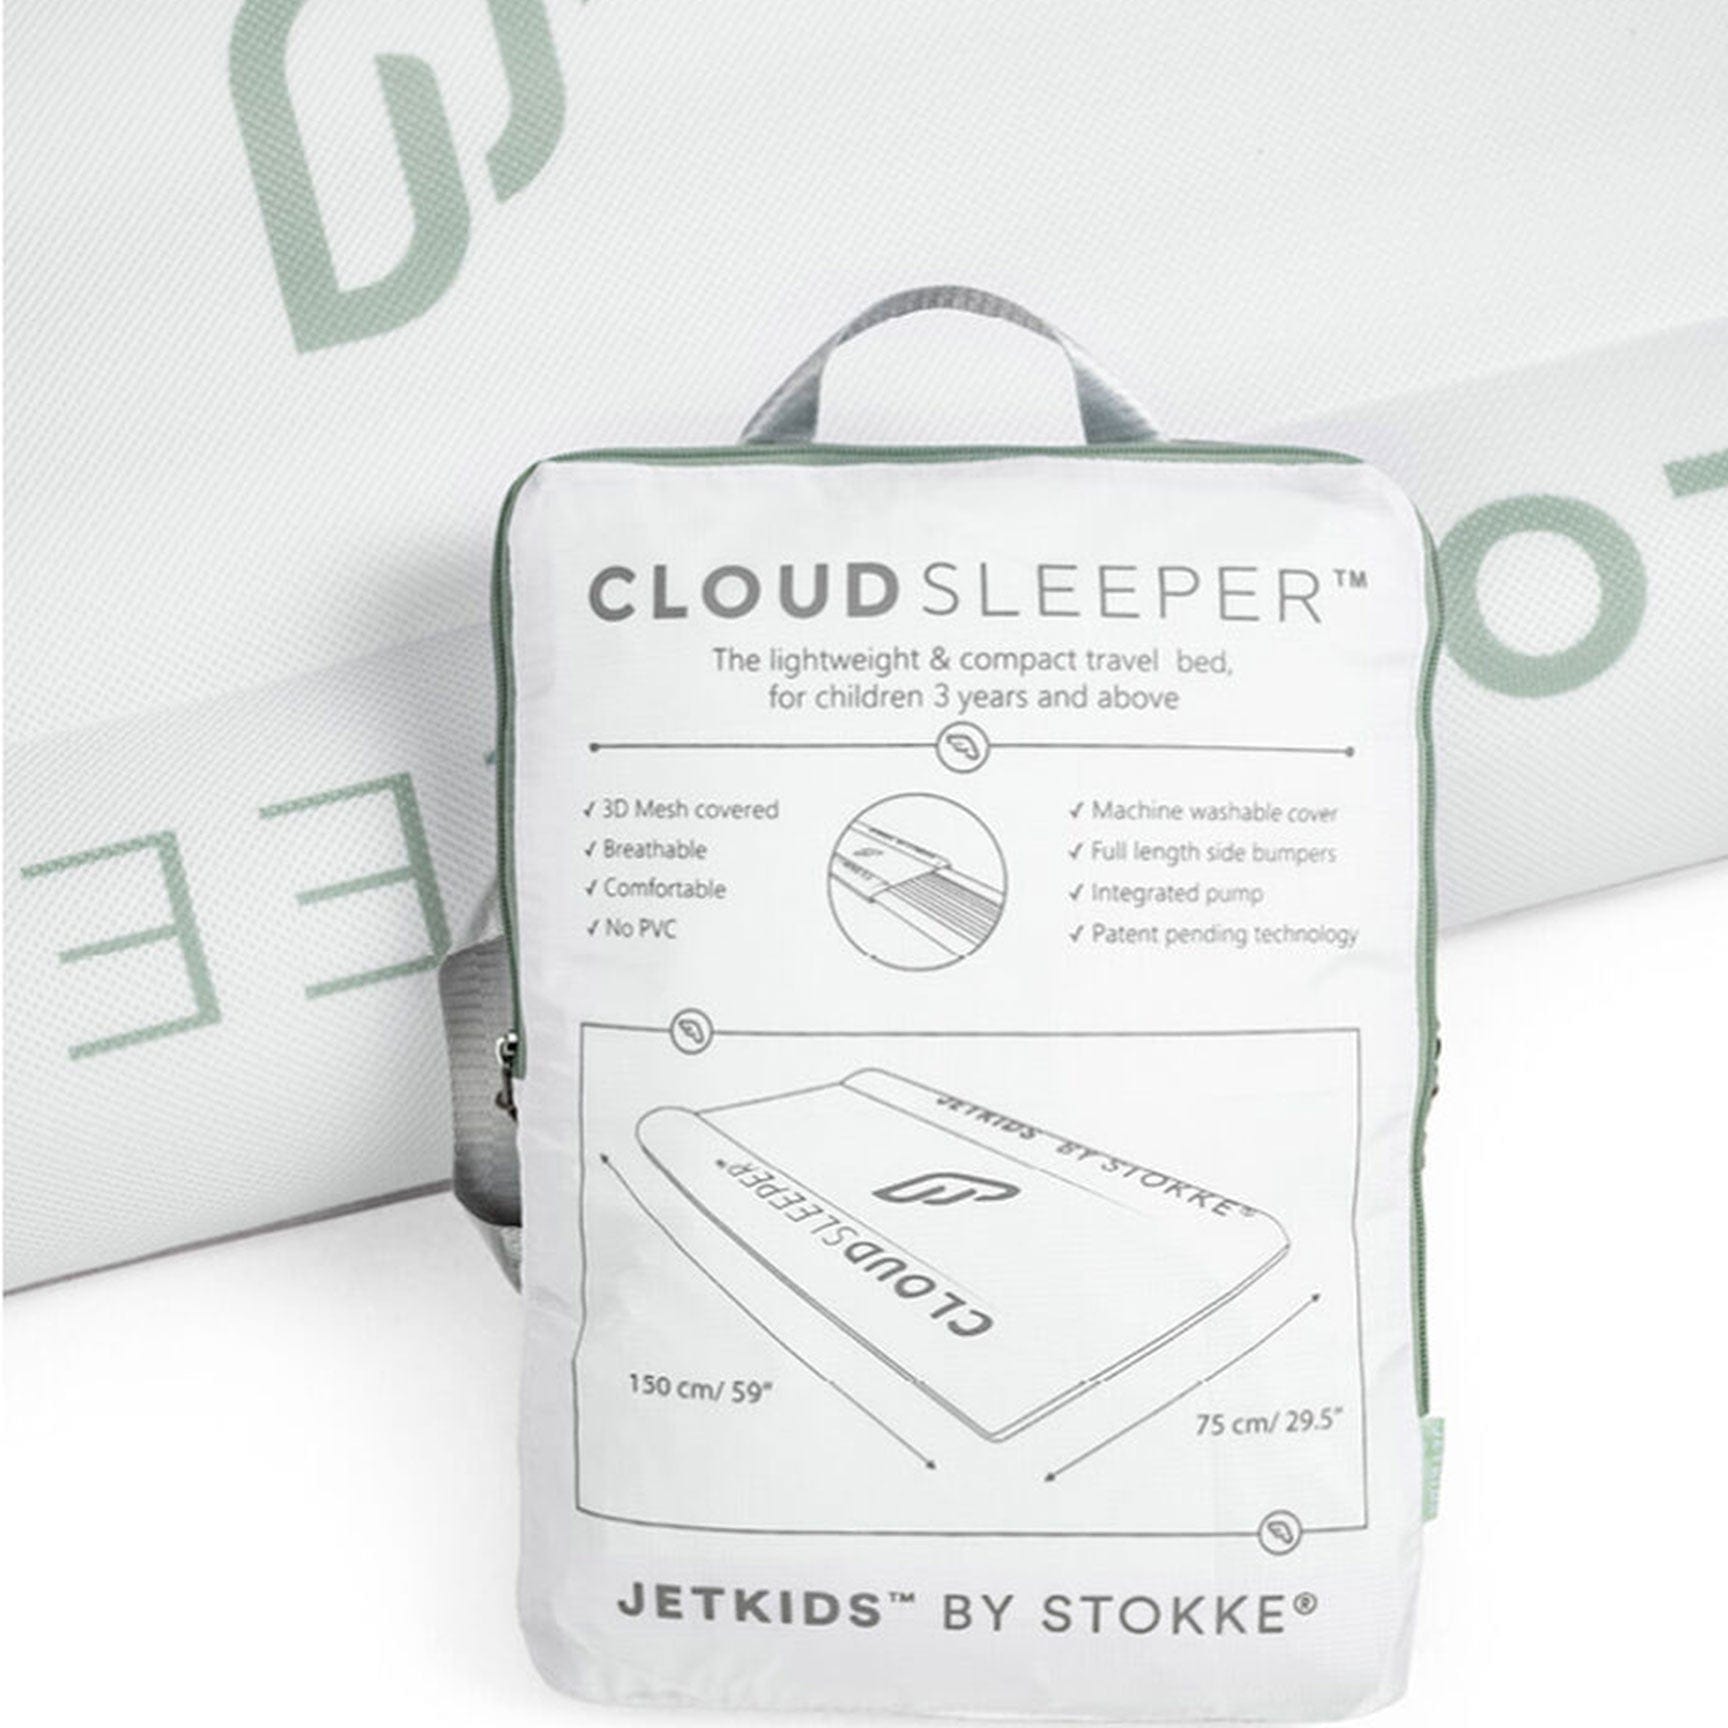 Stokke Jetkids Cloud Sleeper Cot Bed Mattresses 584601 7040355846017